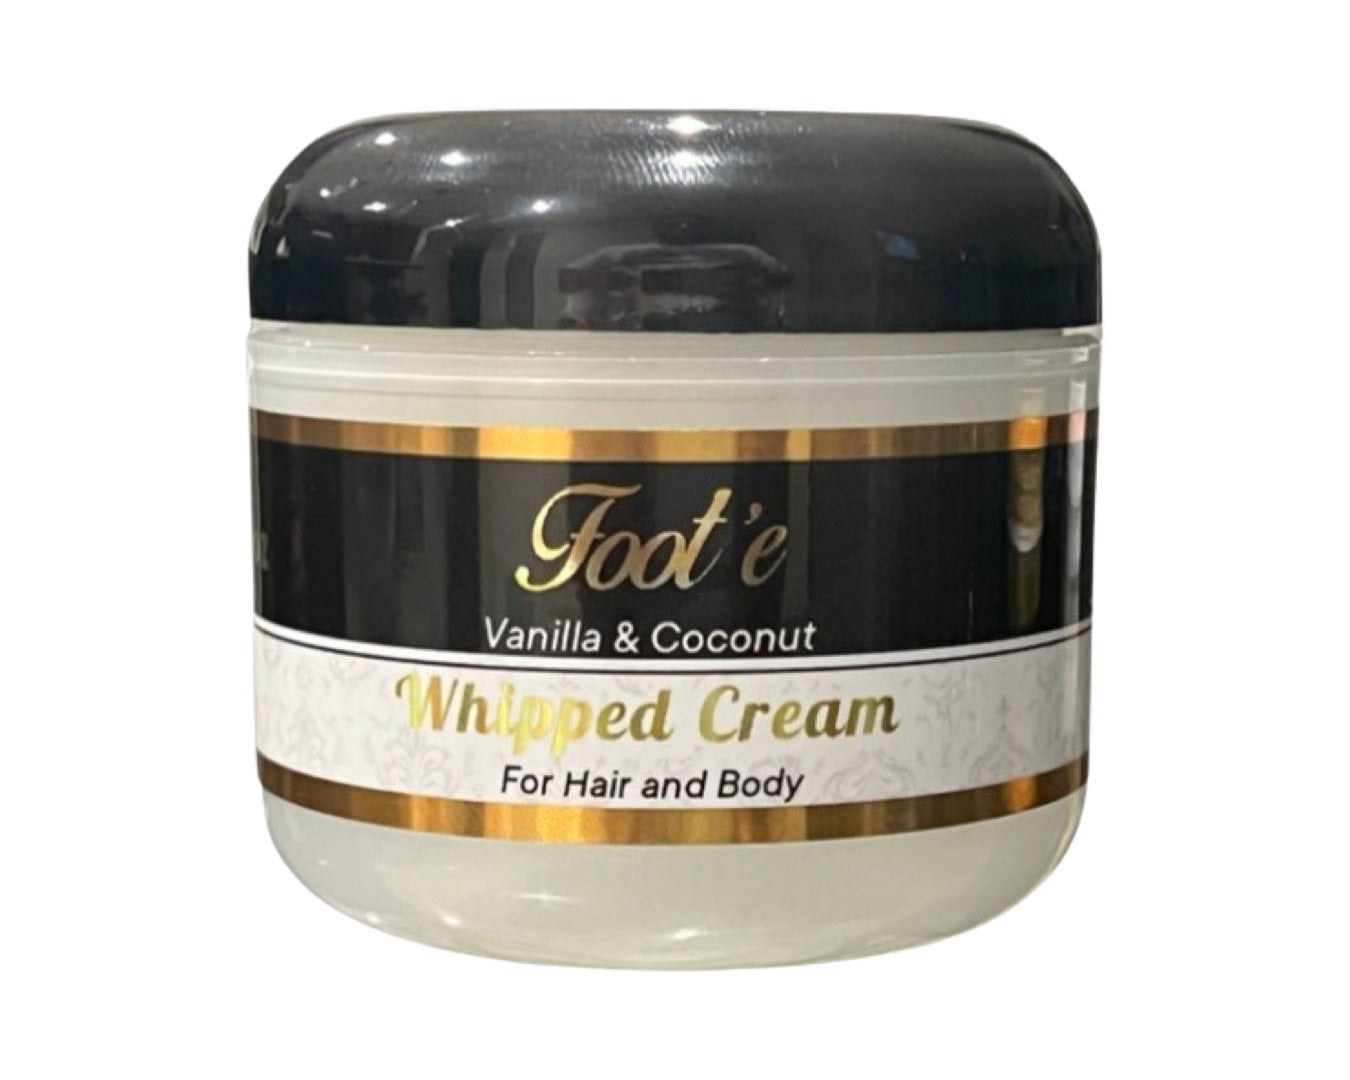 Foot'e Vanilla & Coconut Whipped Cream 4 oz - Foote Hair Care